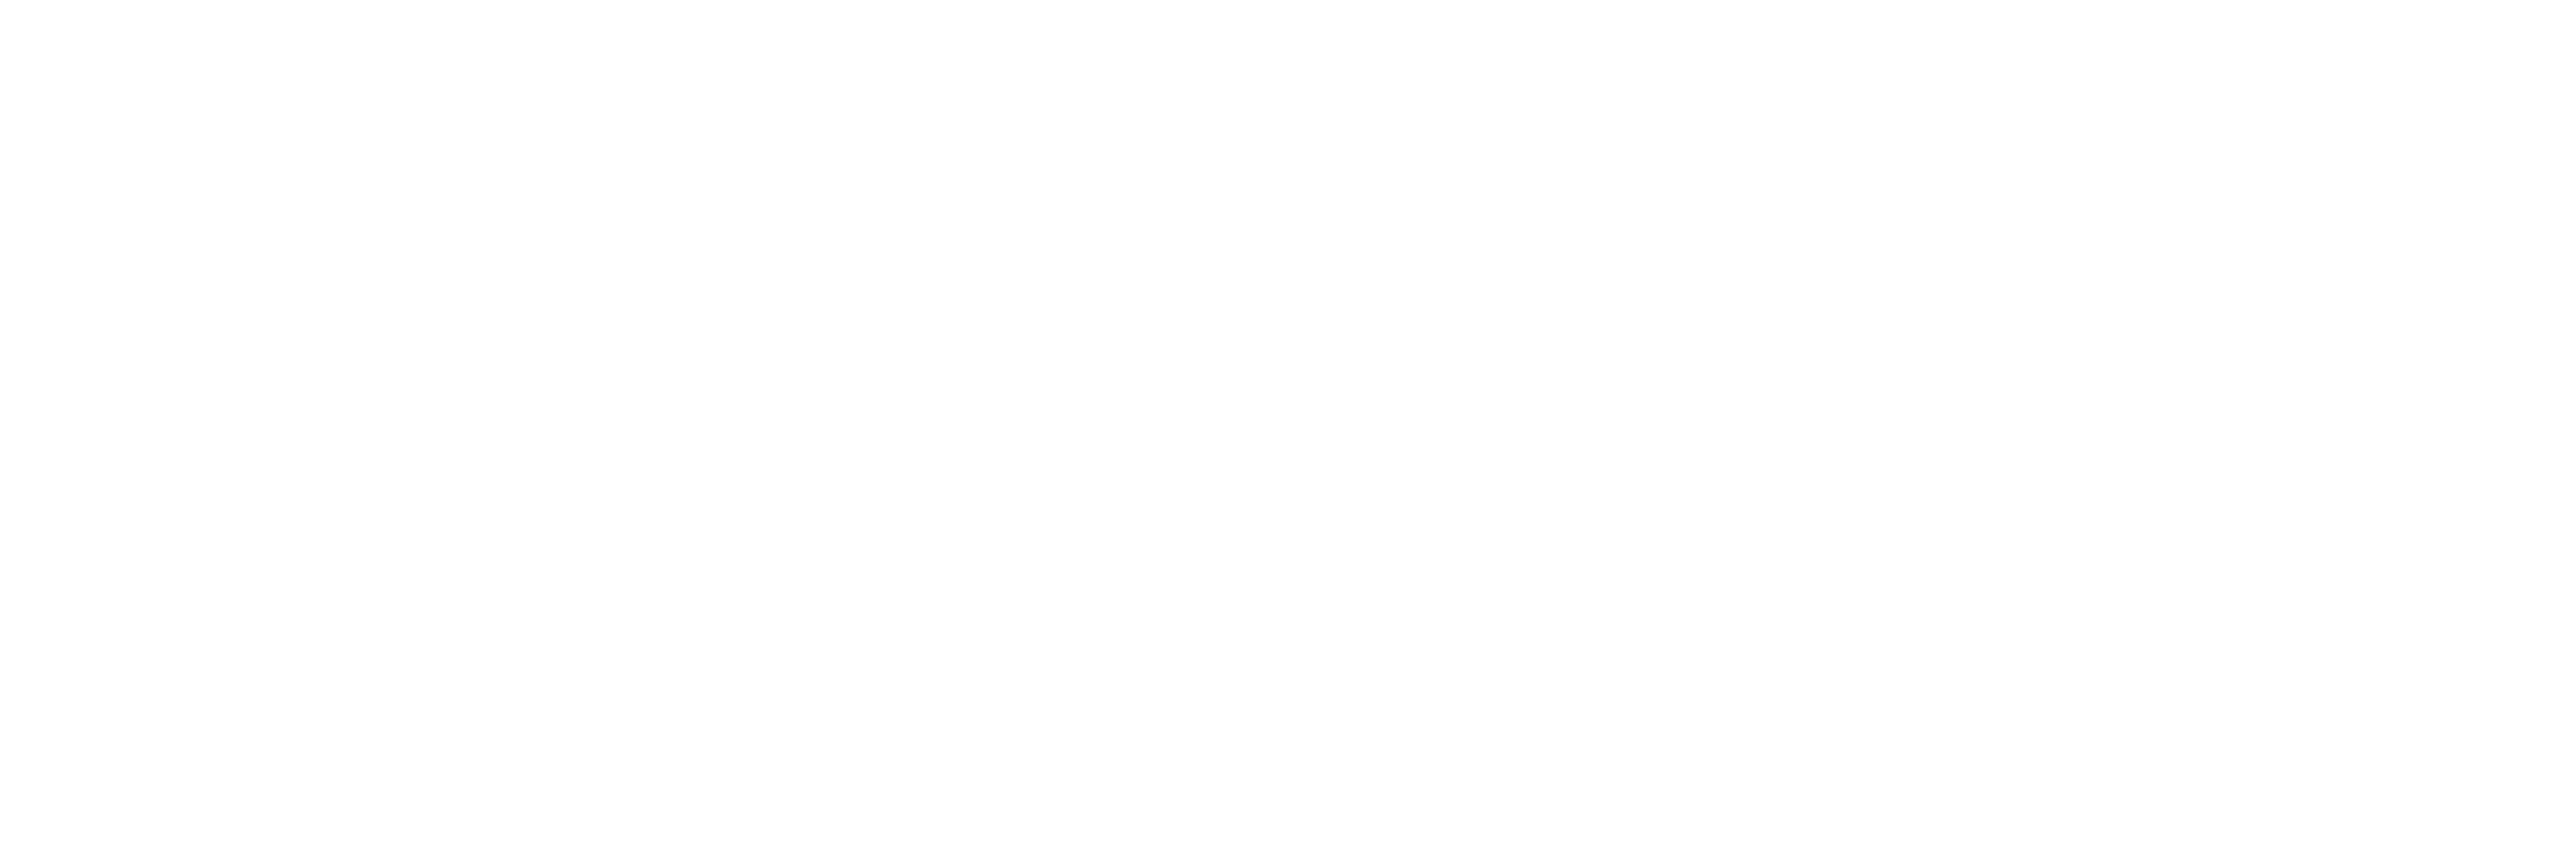 Dubai International Award for Best Practices